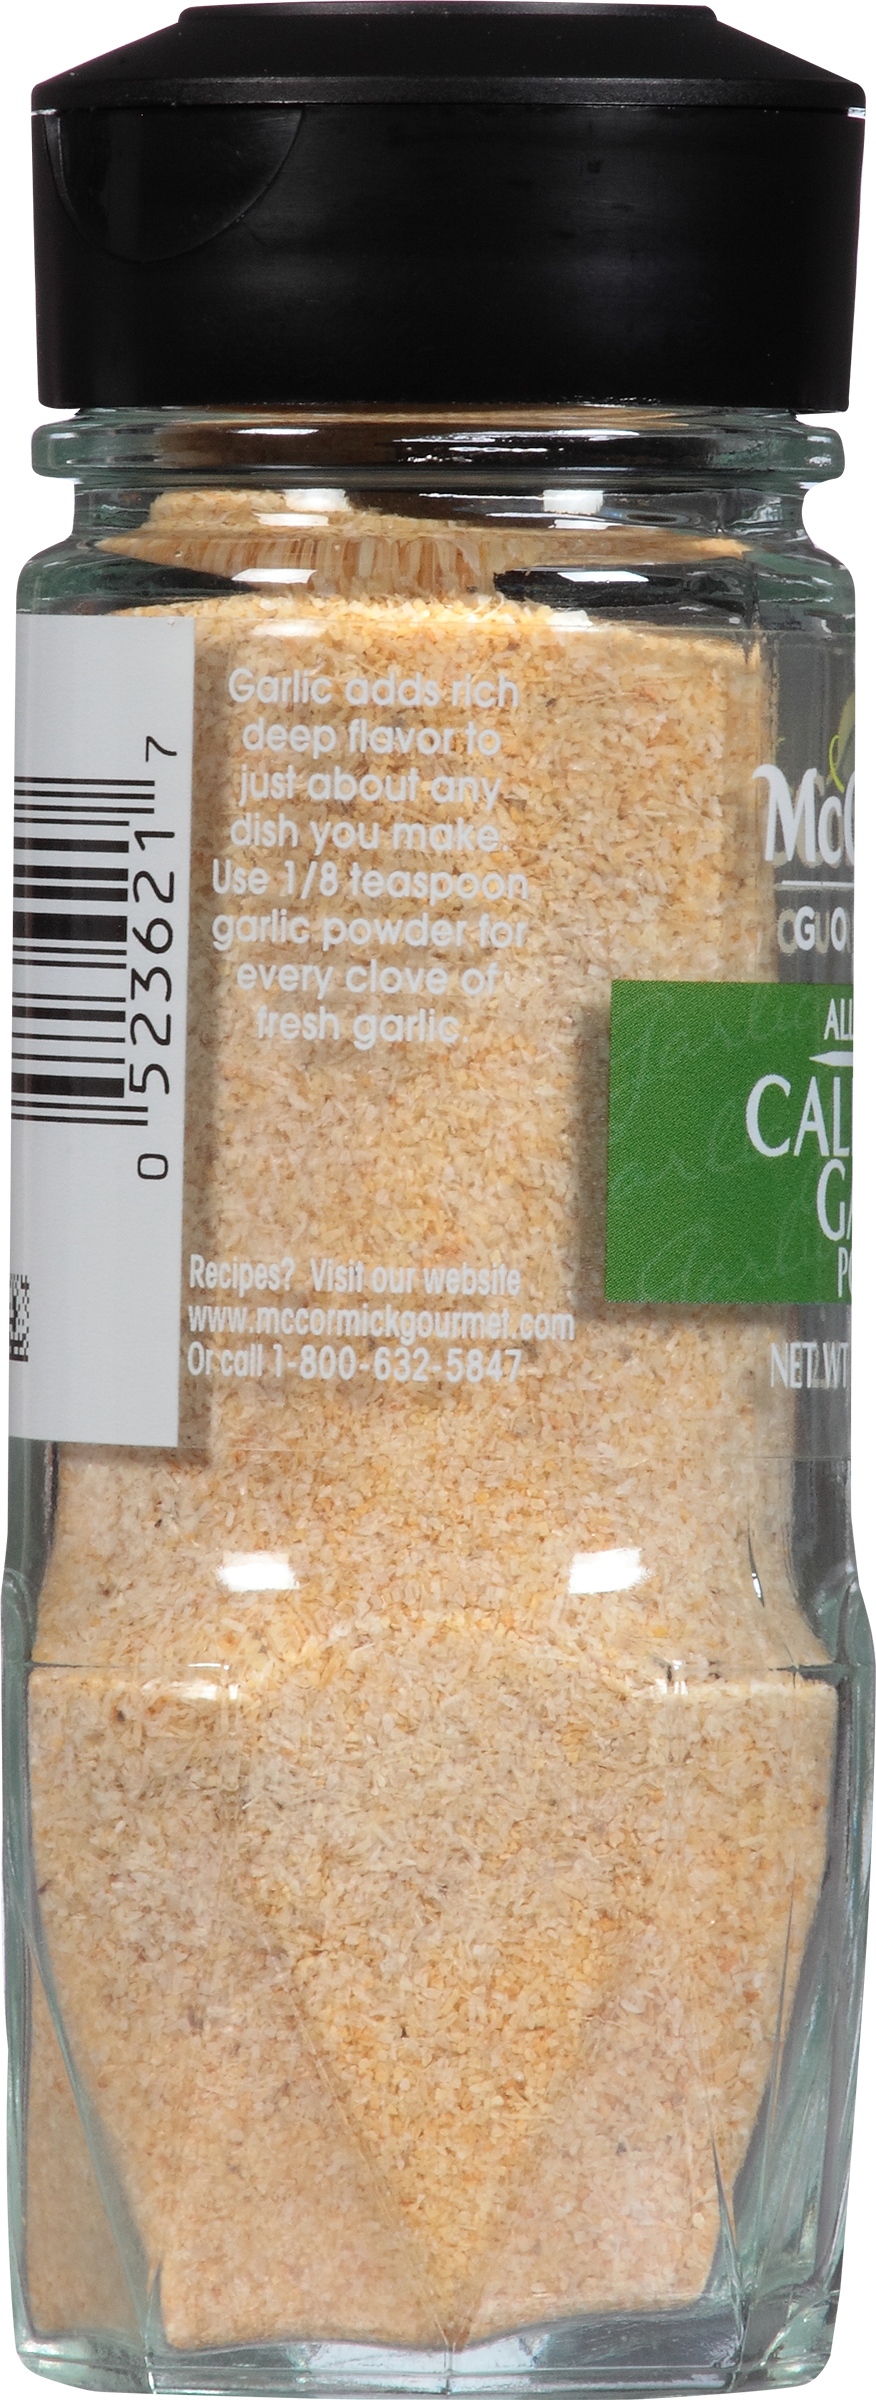 McCormick Gourmet California Garlic Powder, 2.25 Oz - image 2 of 4